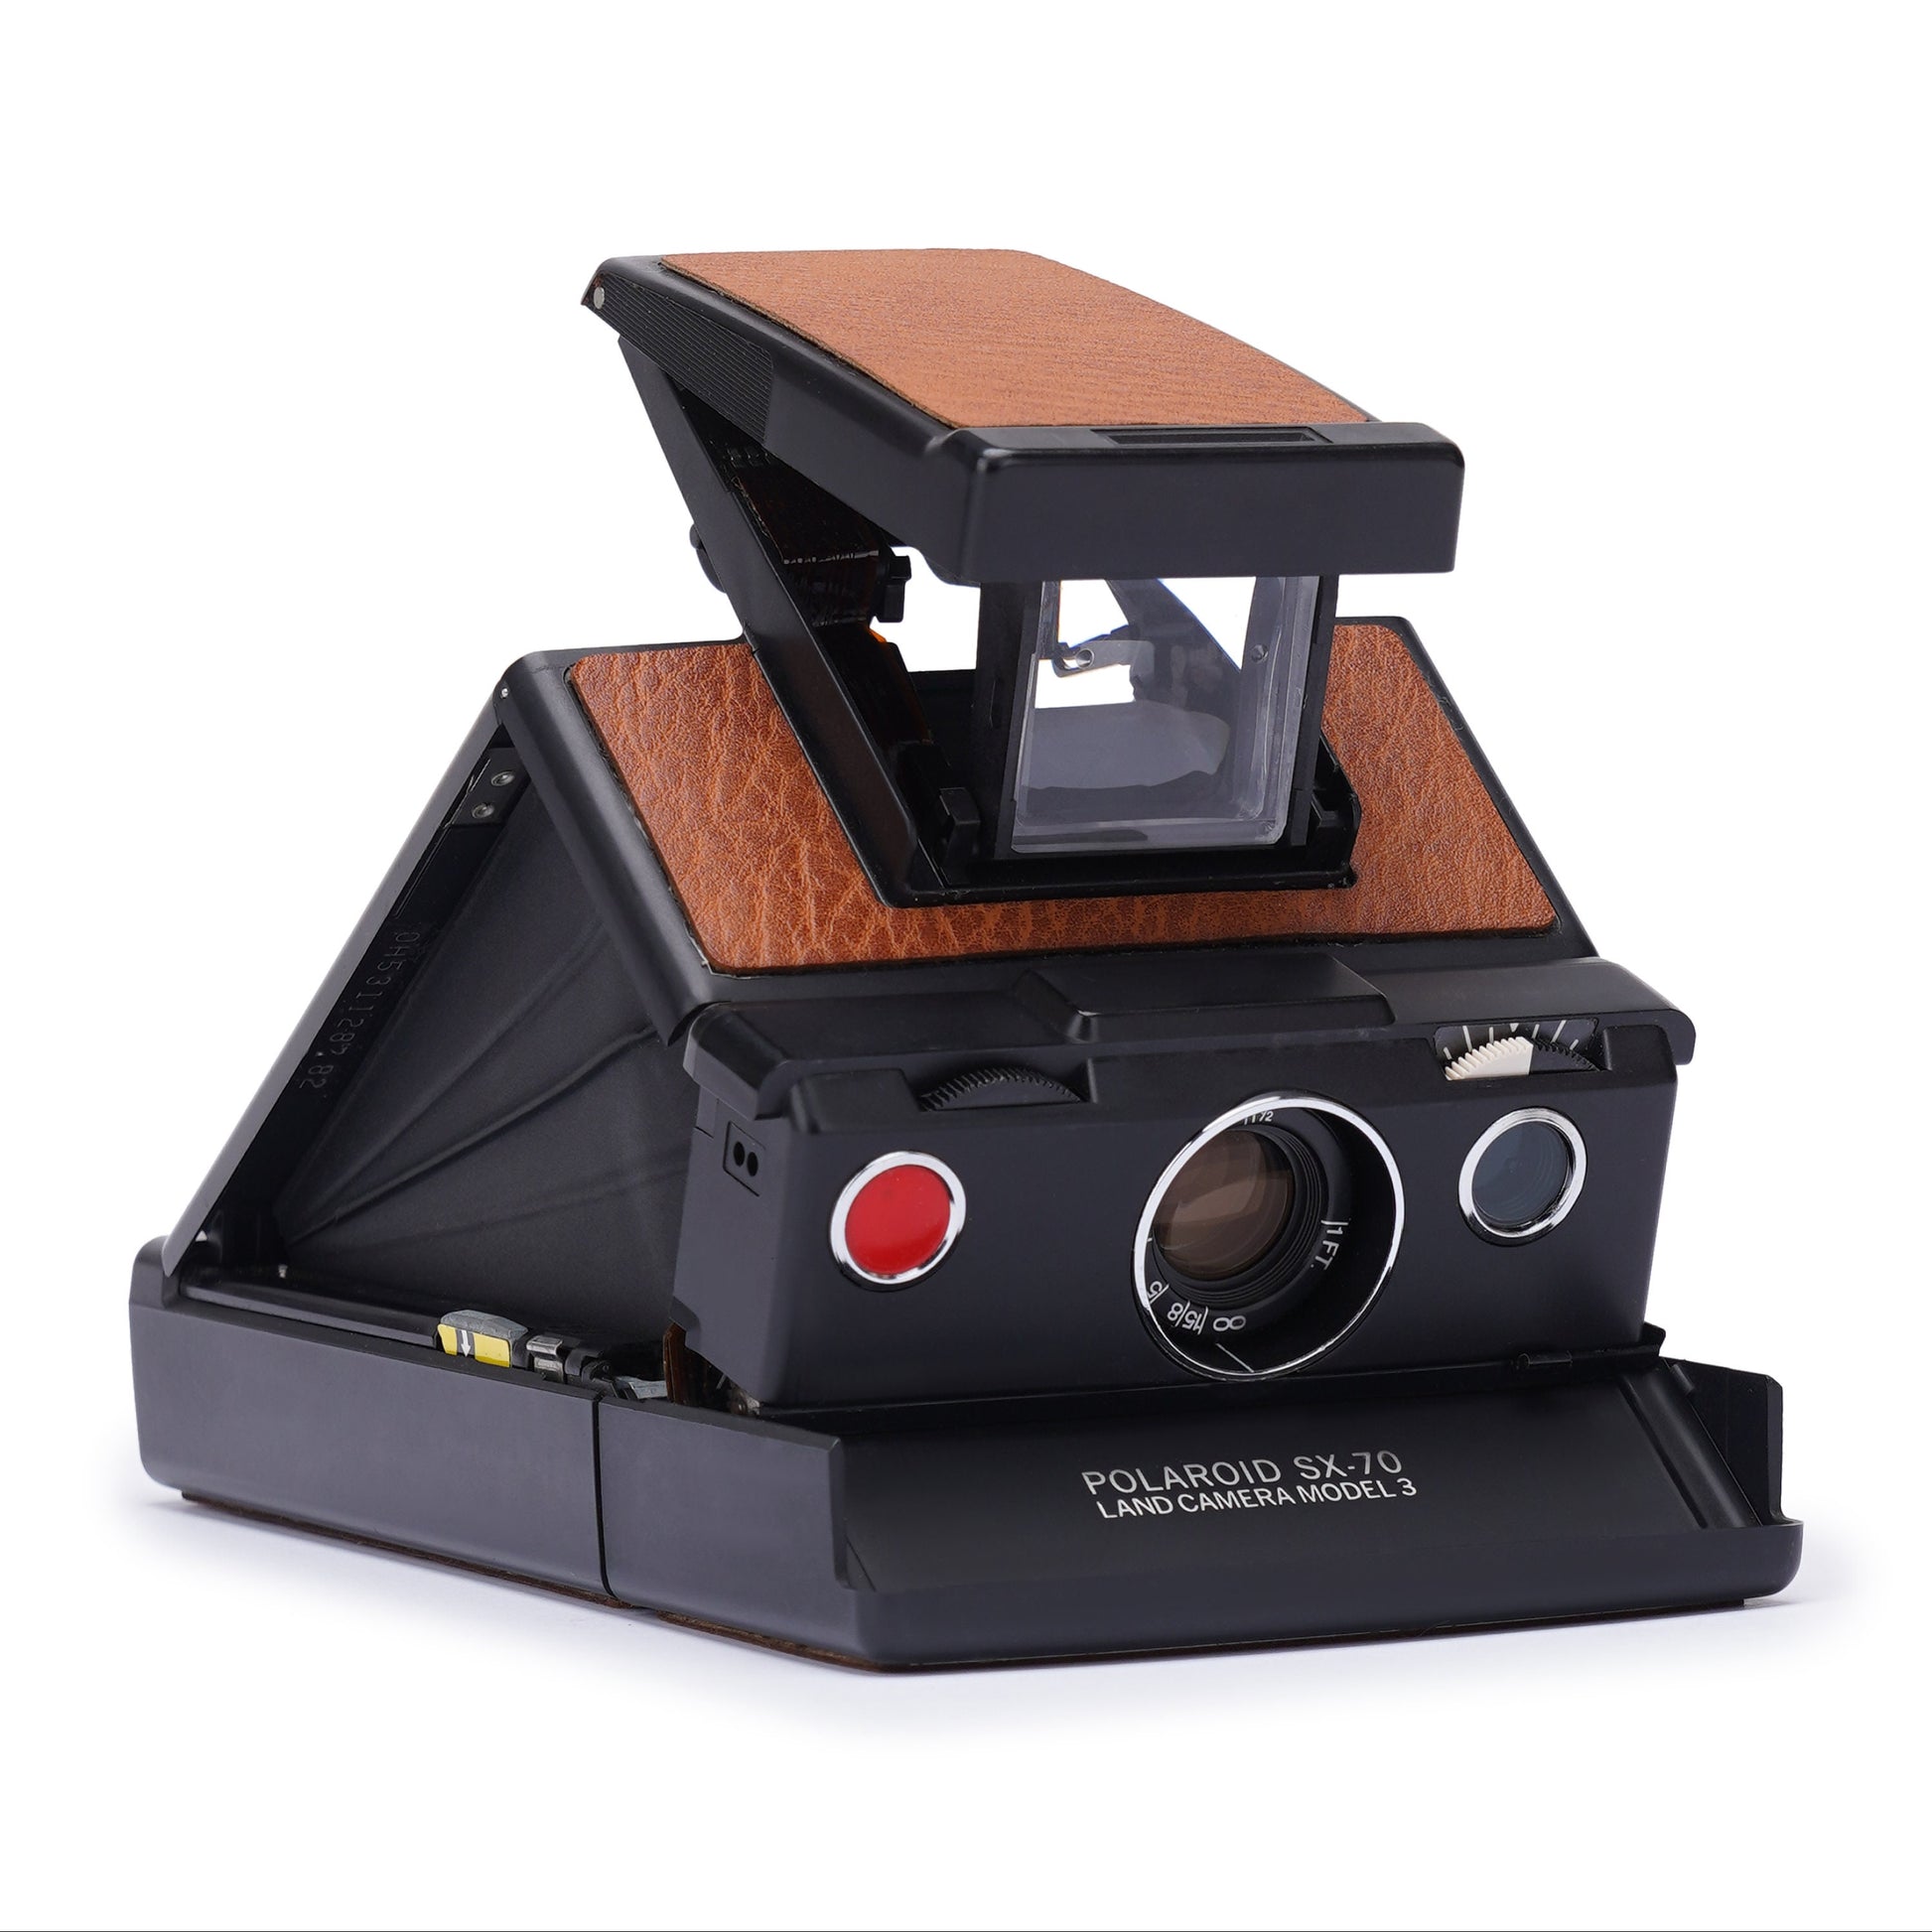 Vintage Polaroid SX-70 Instant Film Camera Model 3